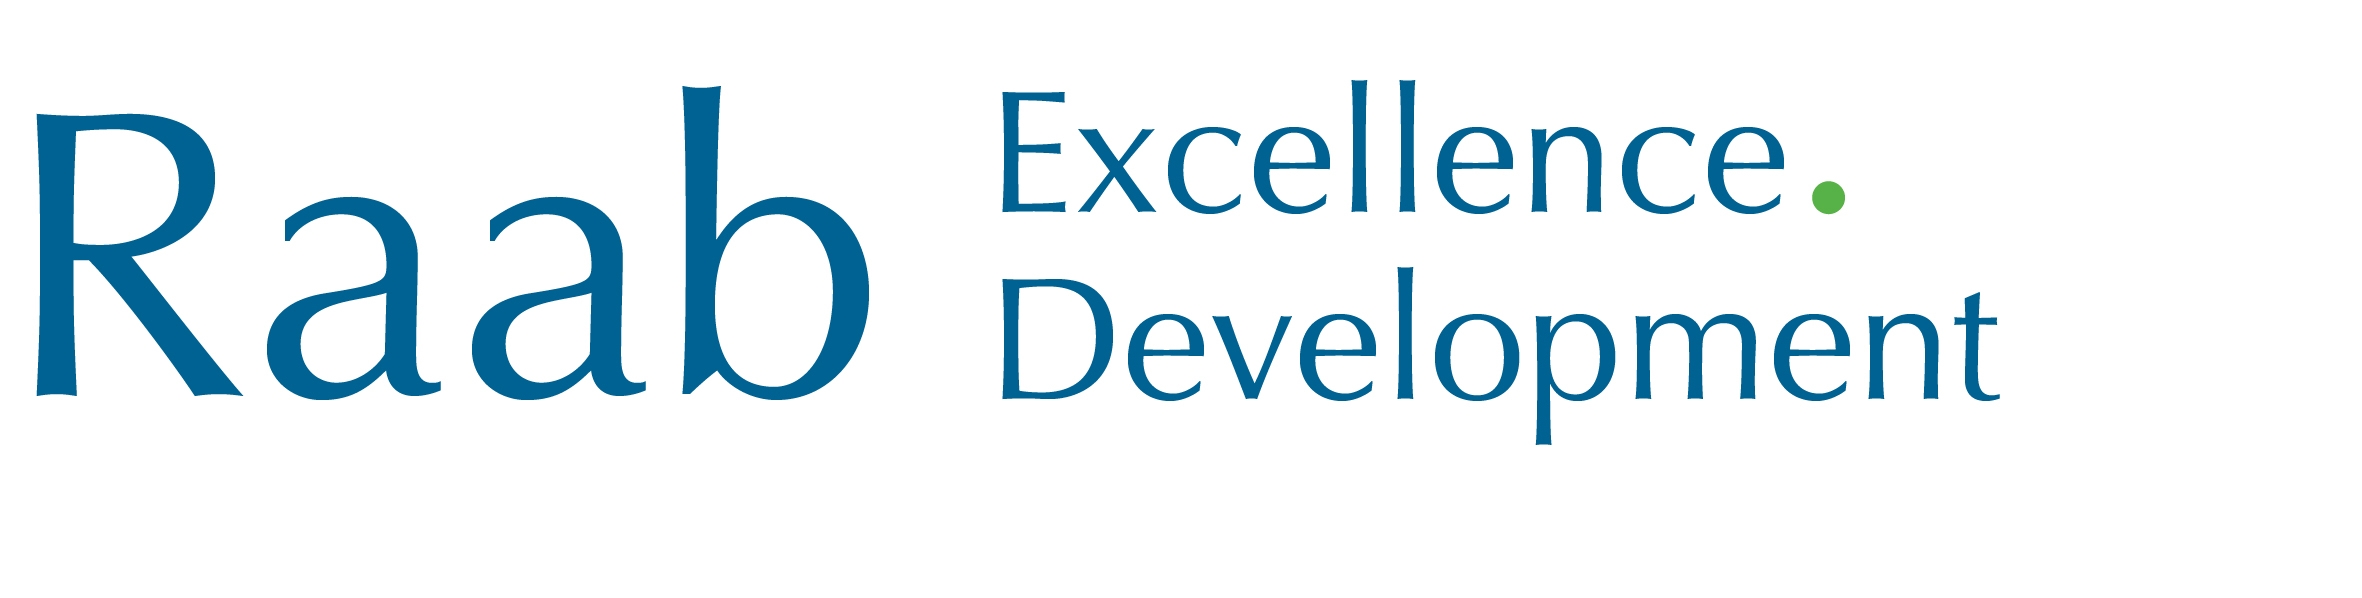 Andrea Raab Excellence Development